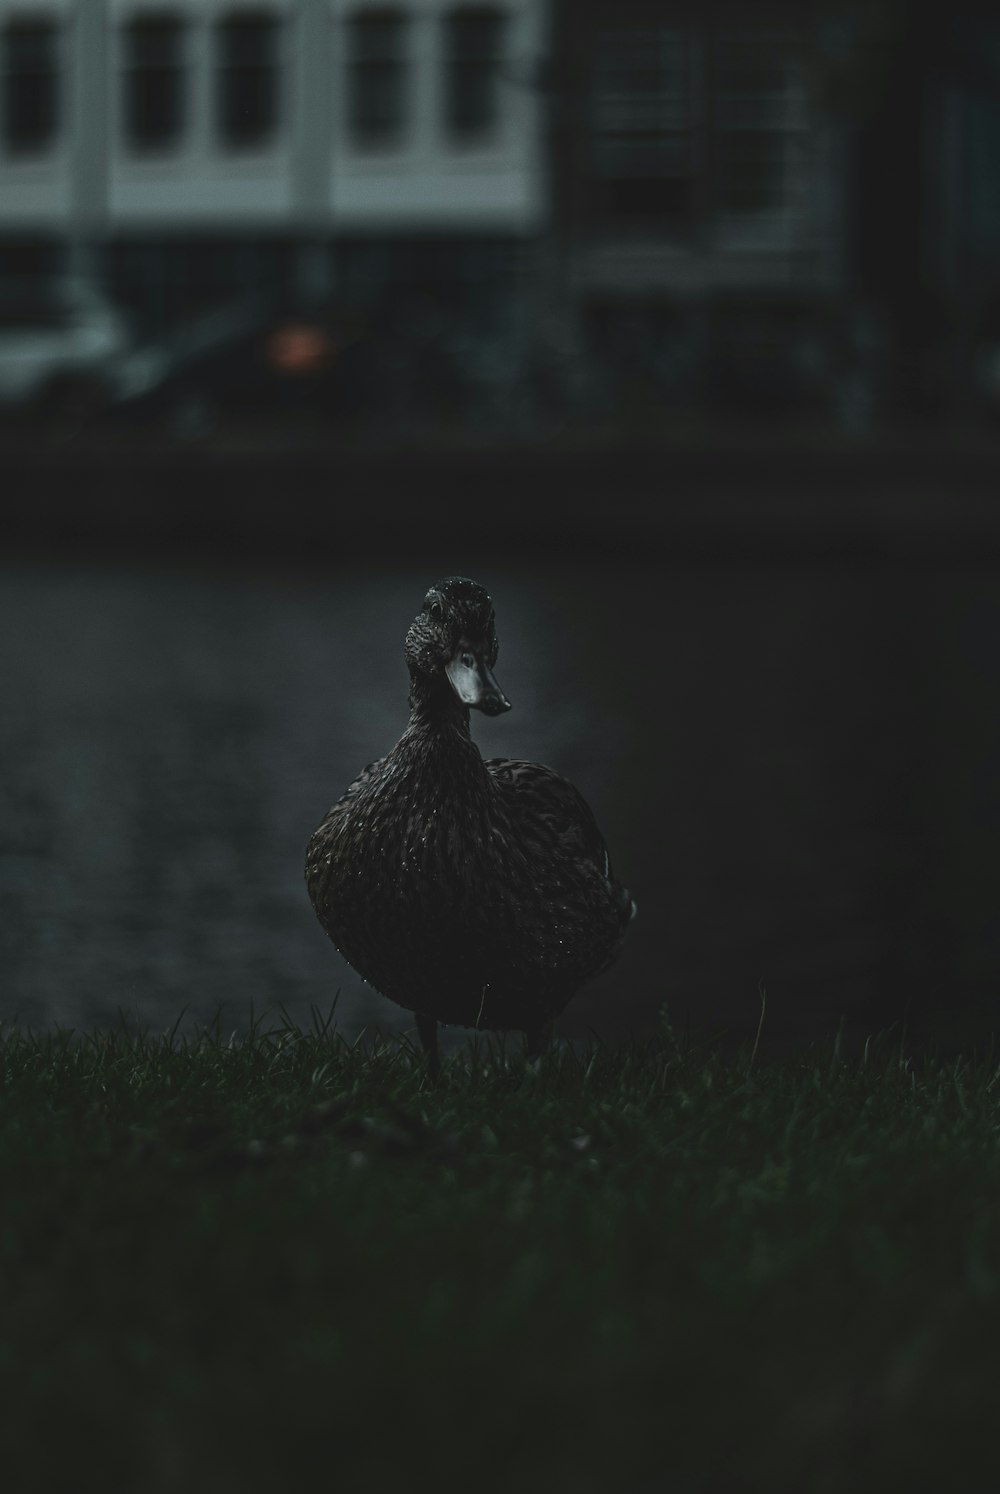 brown duck on grass